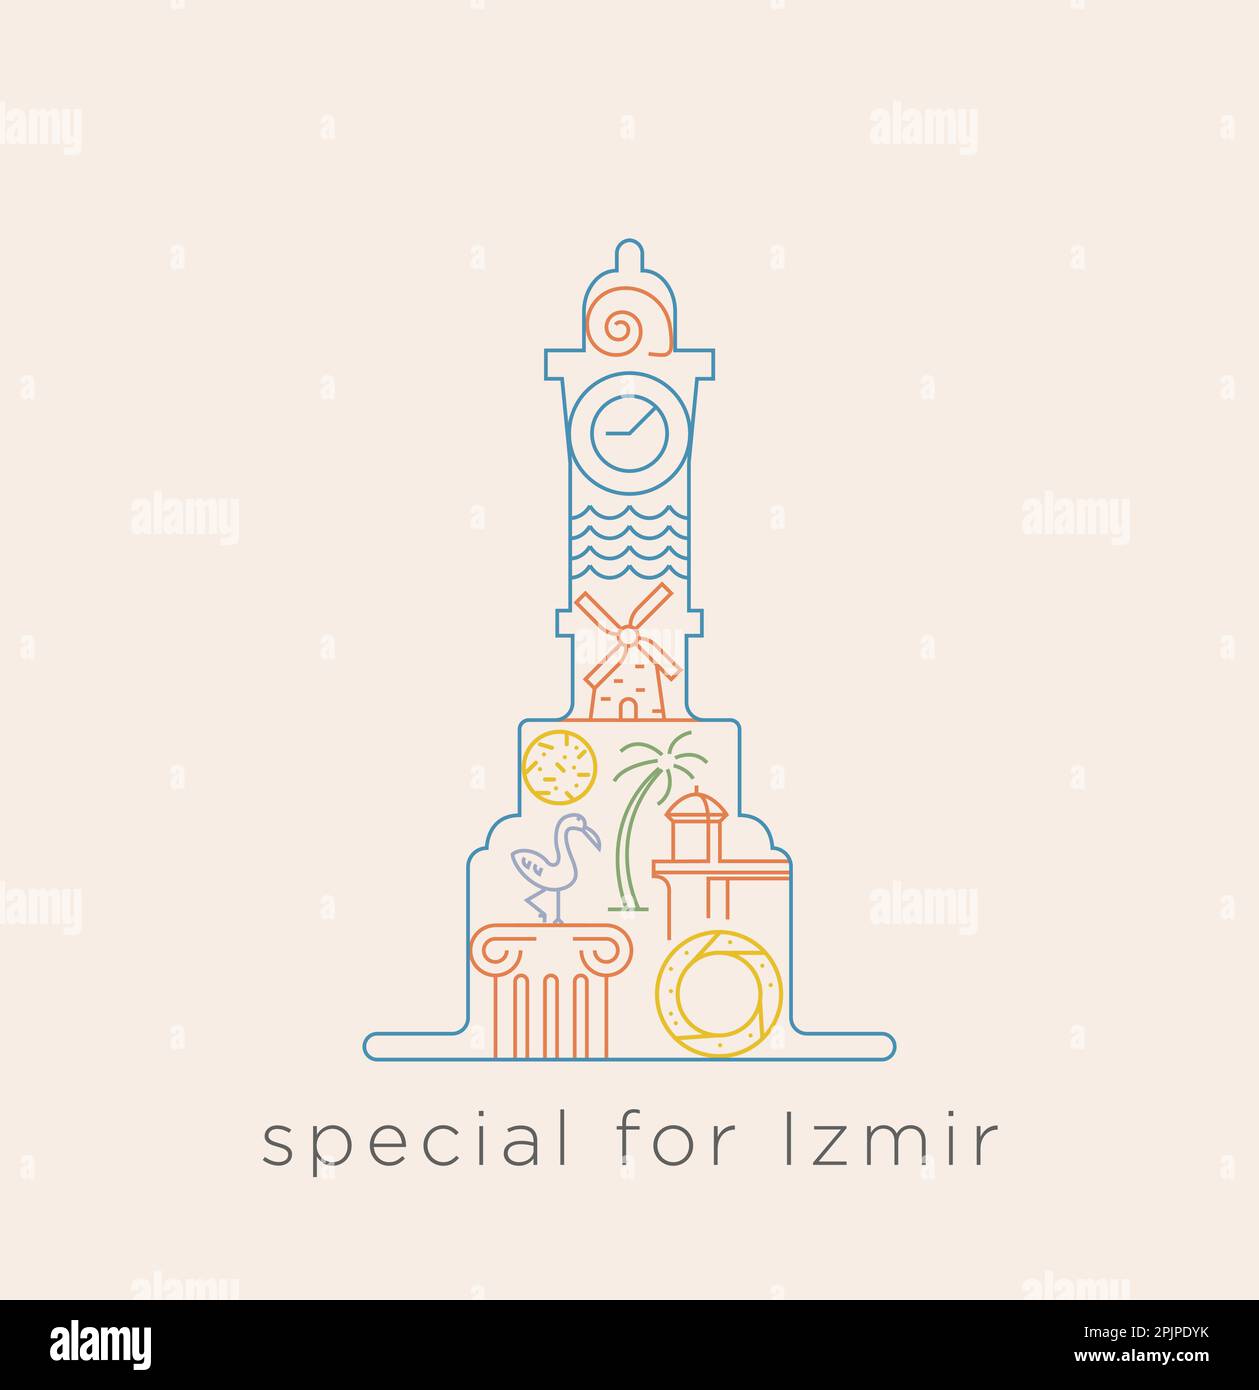 Clock tower of izmir Stock Vector Images - Alamy